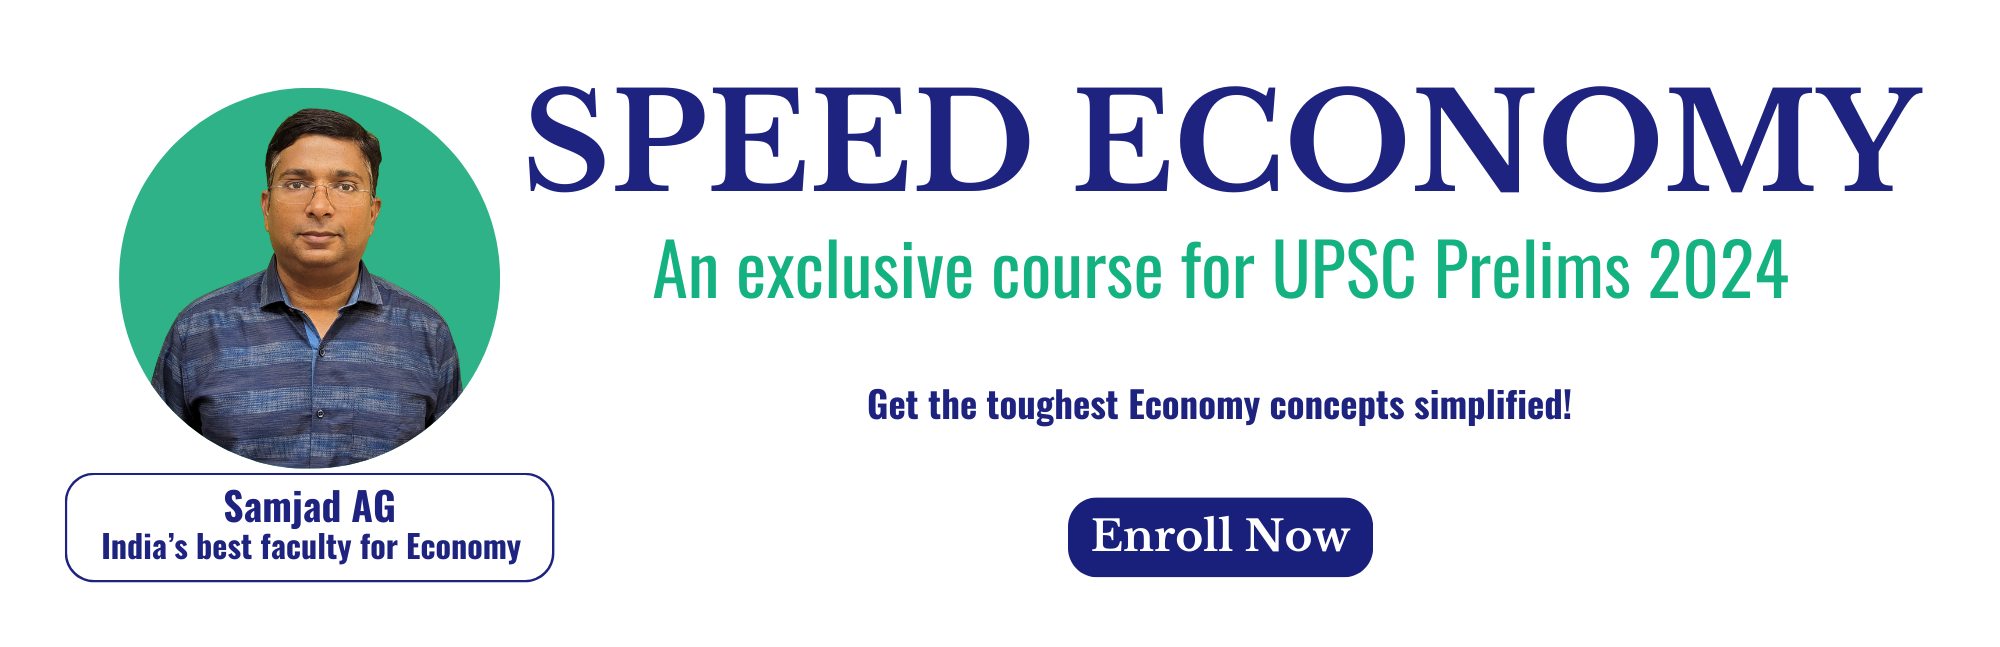 Speed Economy by Samjad sir for UPSC Prelims 2024